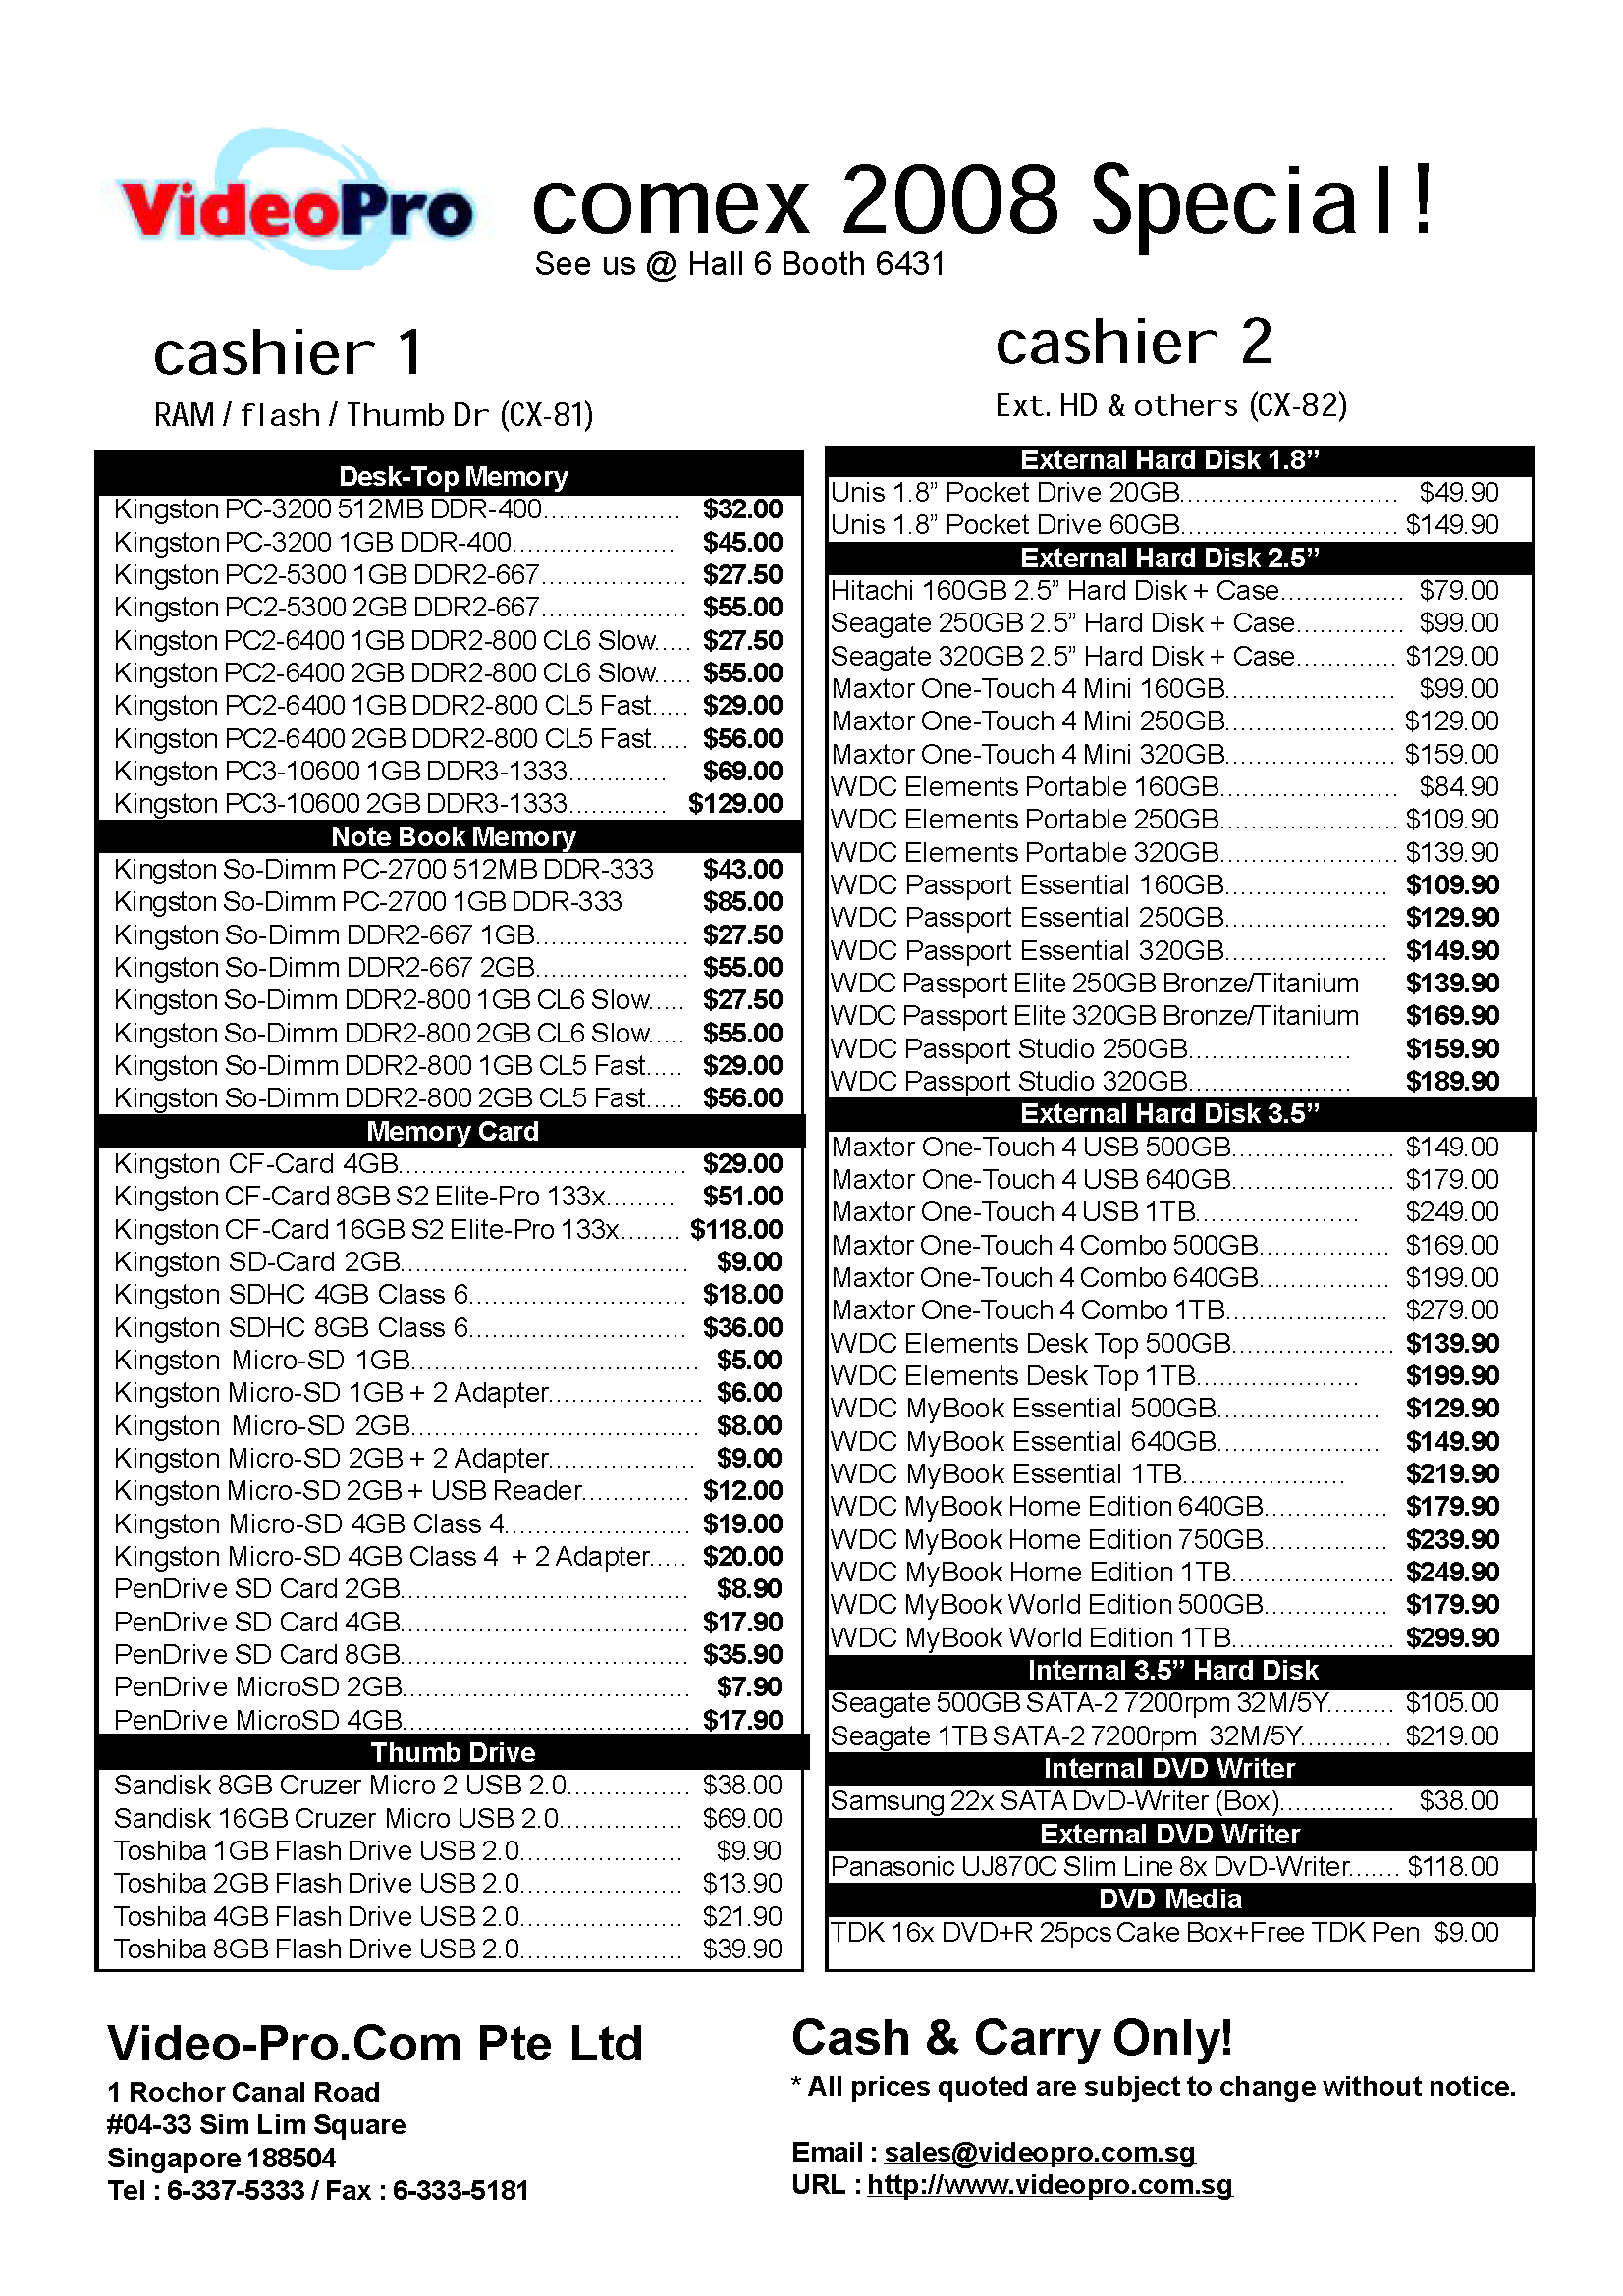 Comex 2008 price list image brochure of Videopro 2